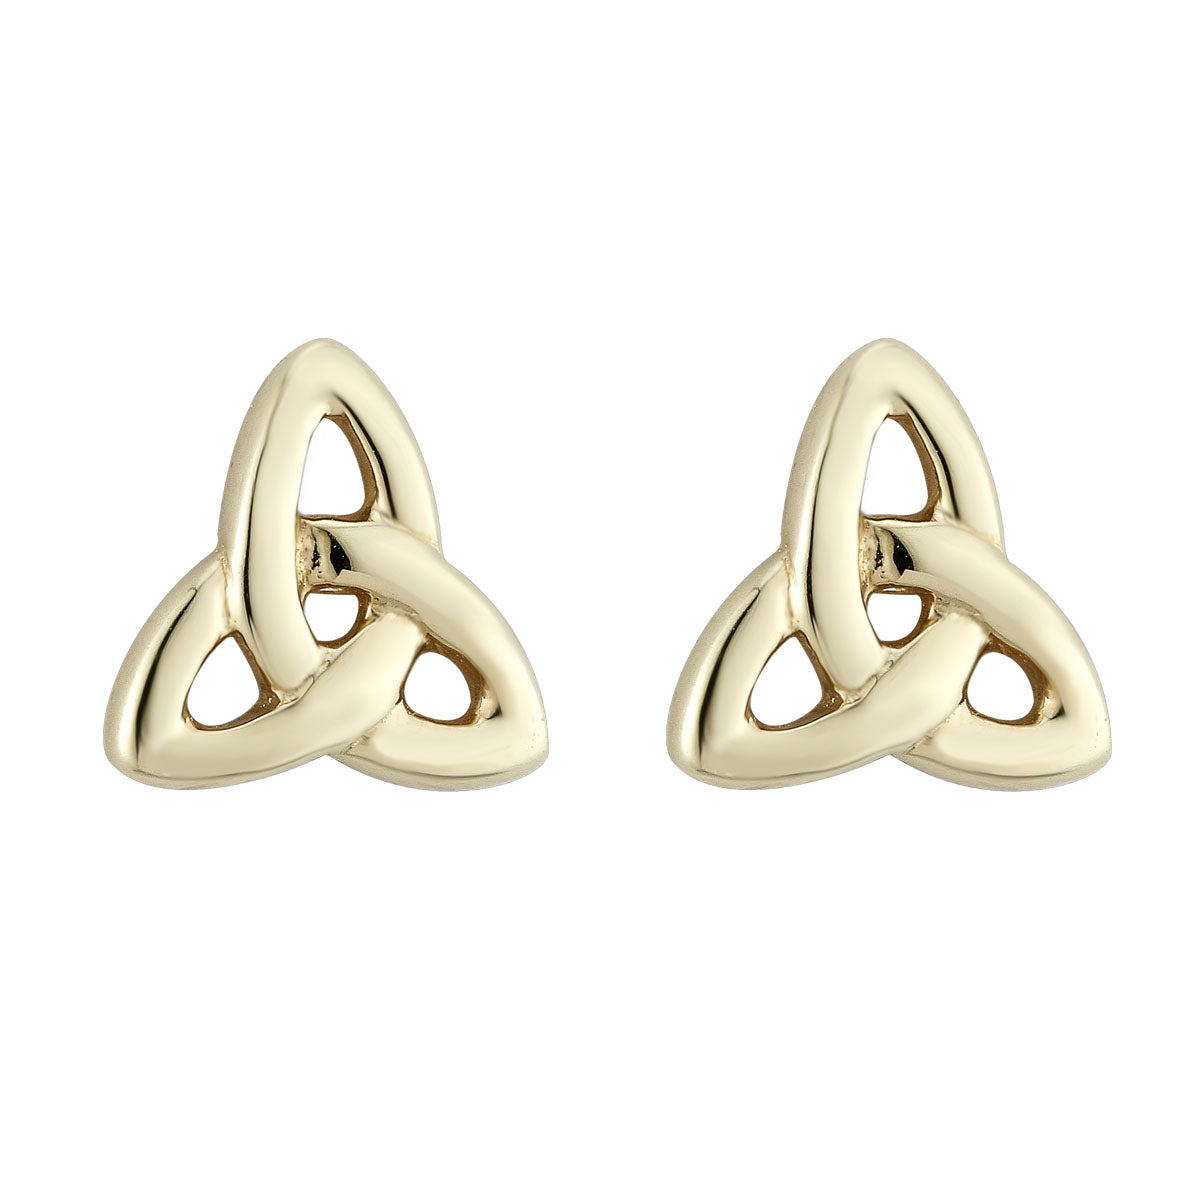 Stock image of Solvar 10K Gold Small Trinity Knot Stud Earrings S34151